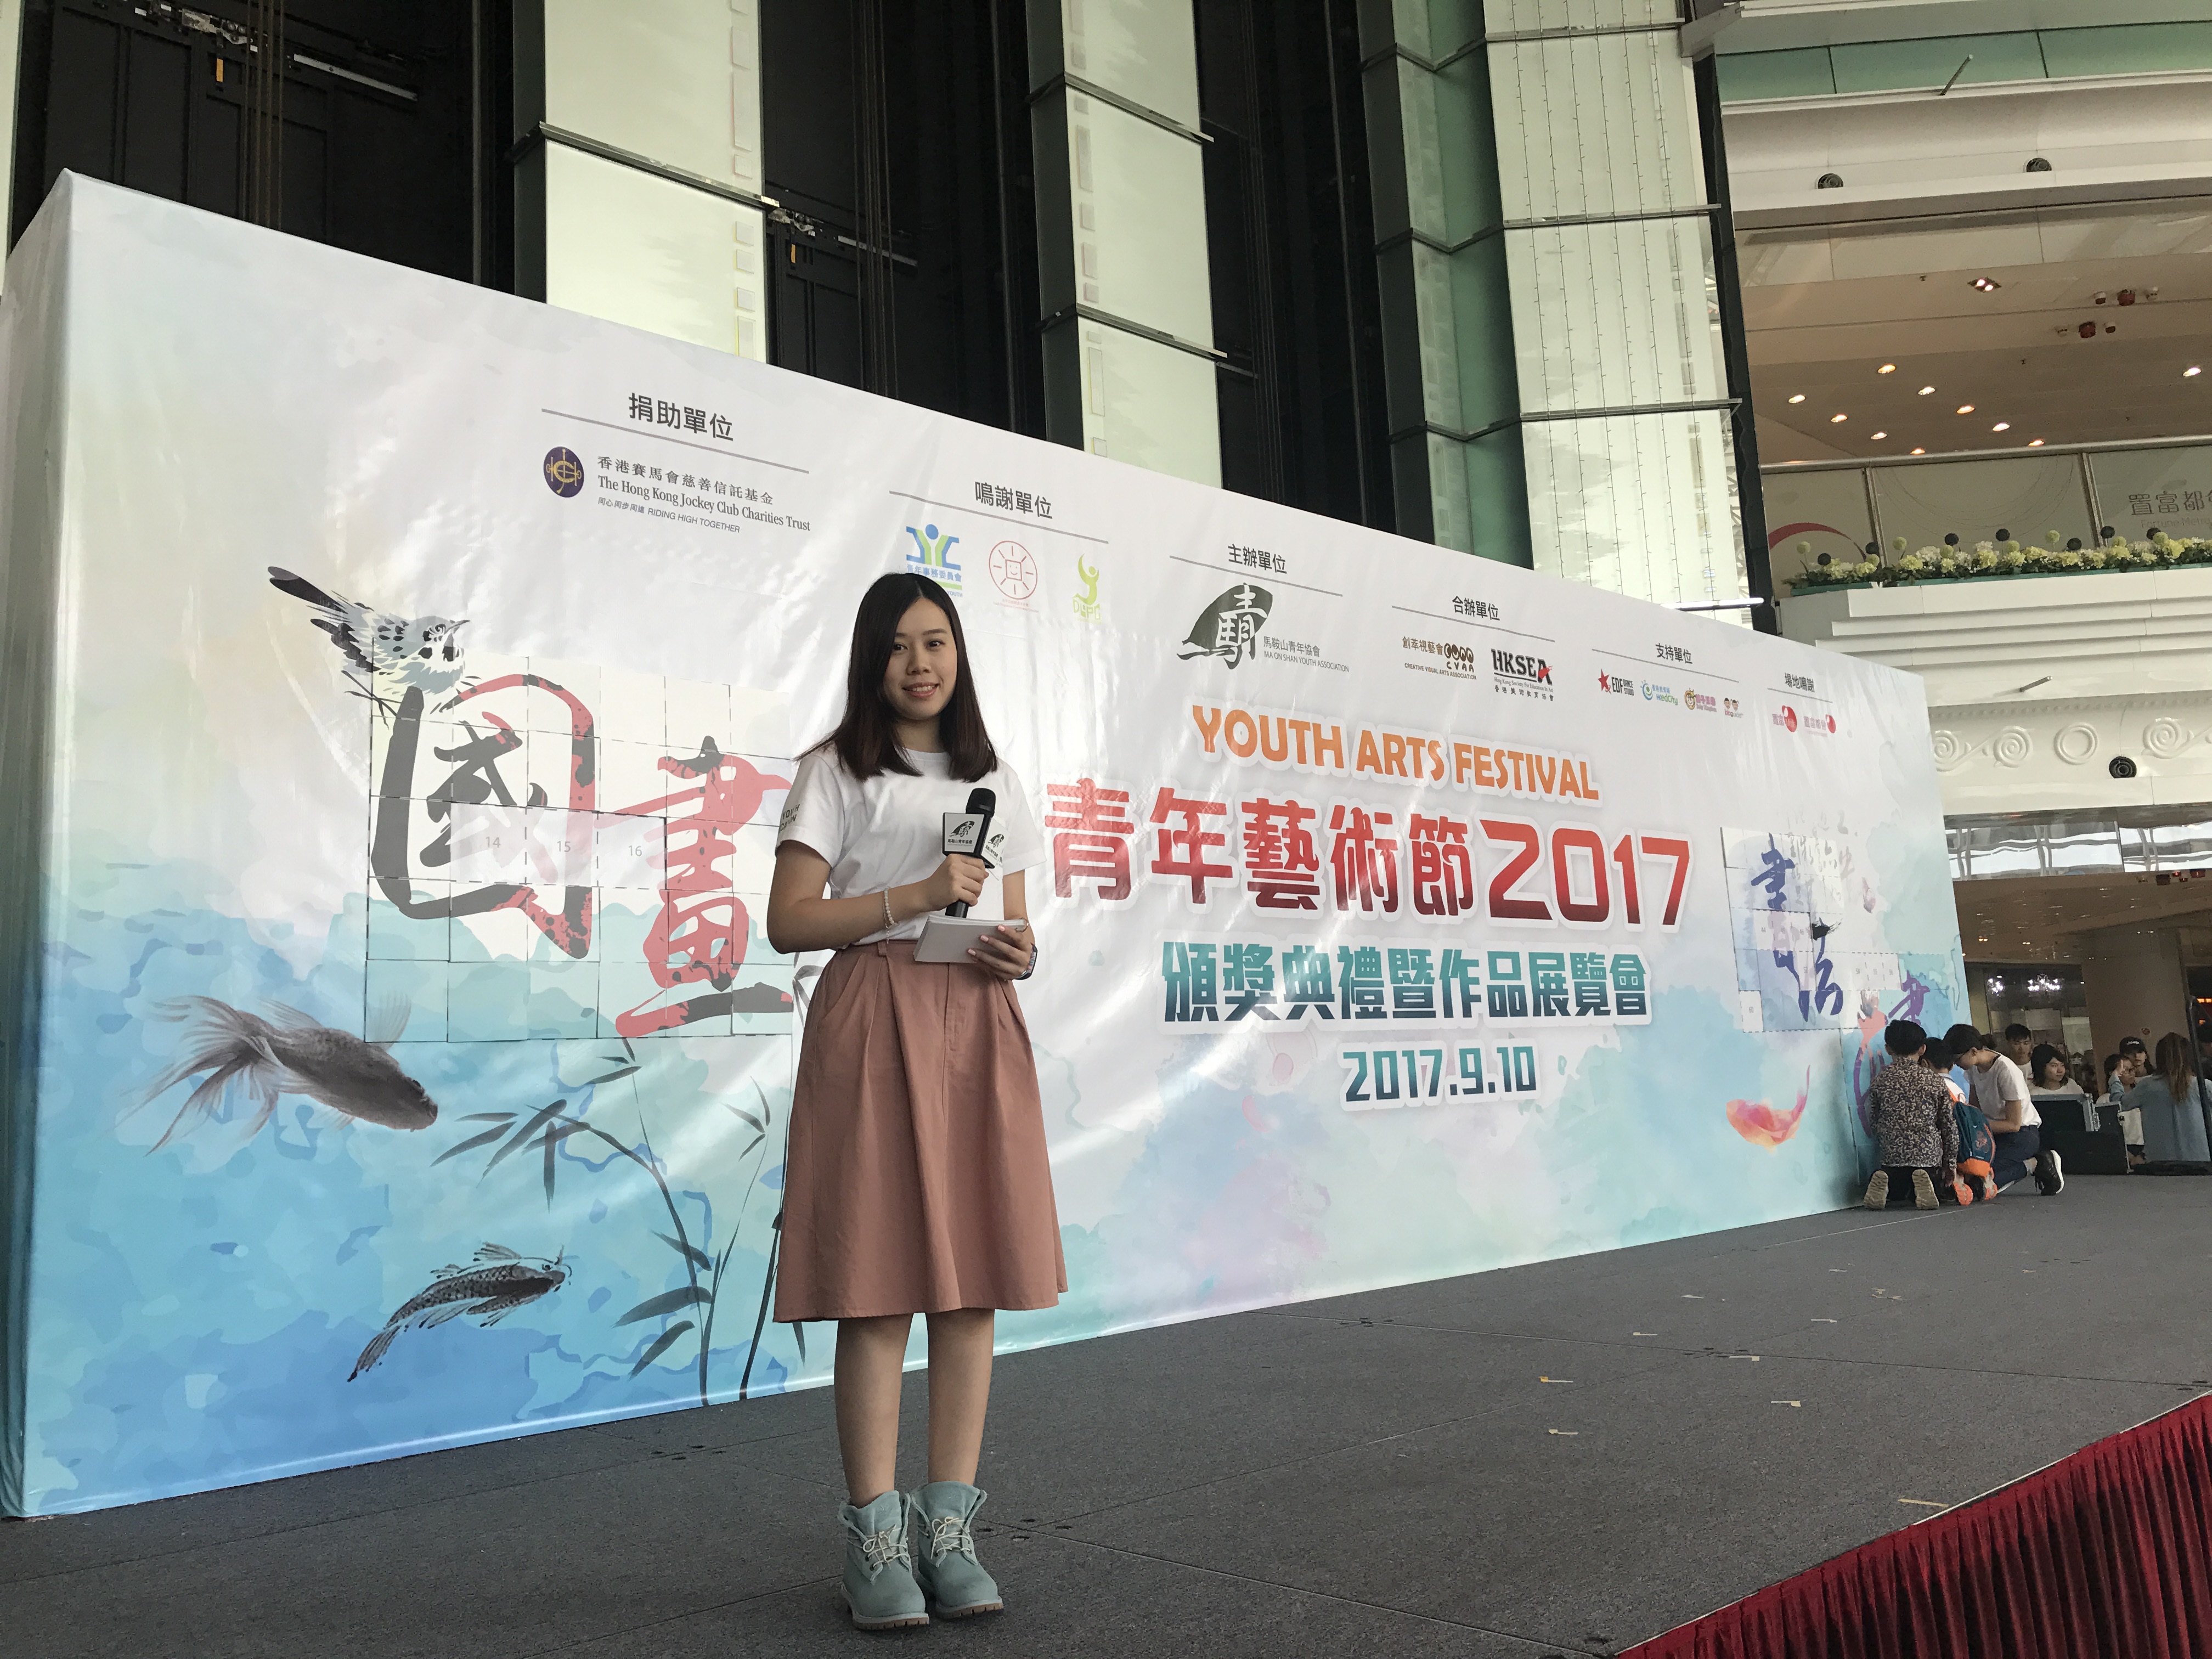 Angela Wu司儀工作紀錄: [義務司儀] 青年藝術節2017頒獎典禮暨作品展覽會